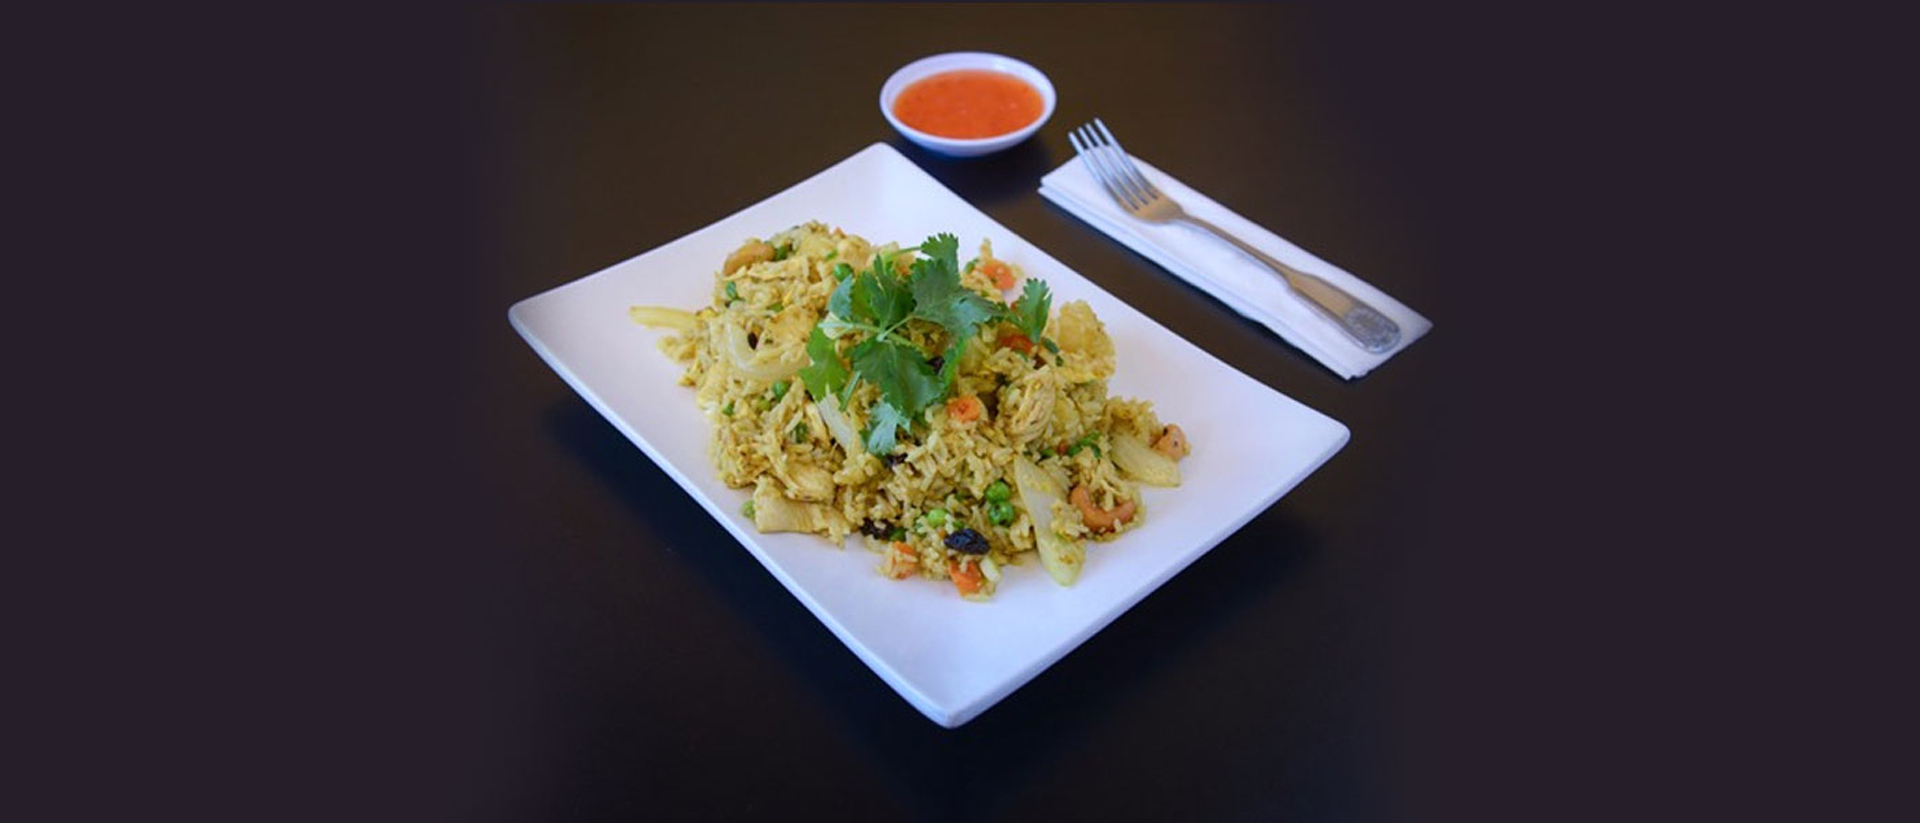 Tasty Thai Cuisine in Culver City | Tree House Thai Restaurant ...